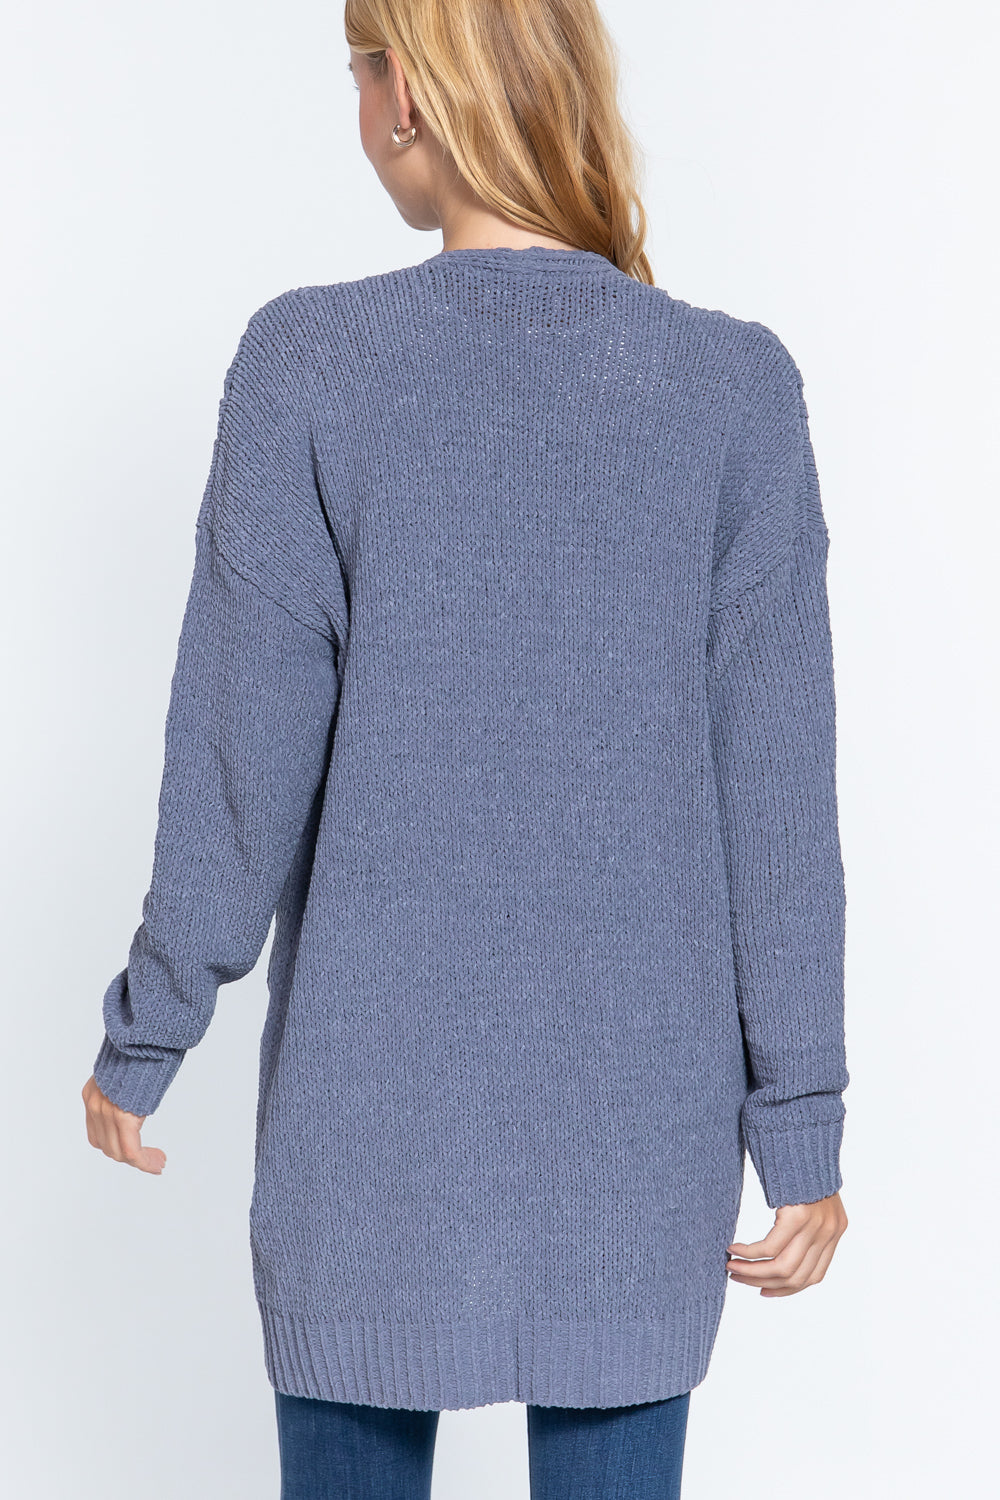 Women's Chenille Sweater Cardigan